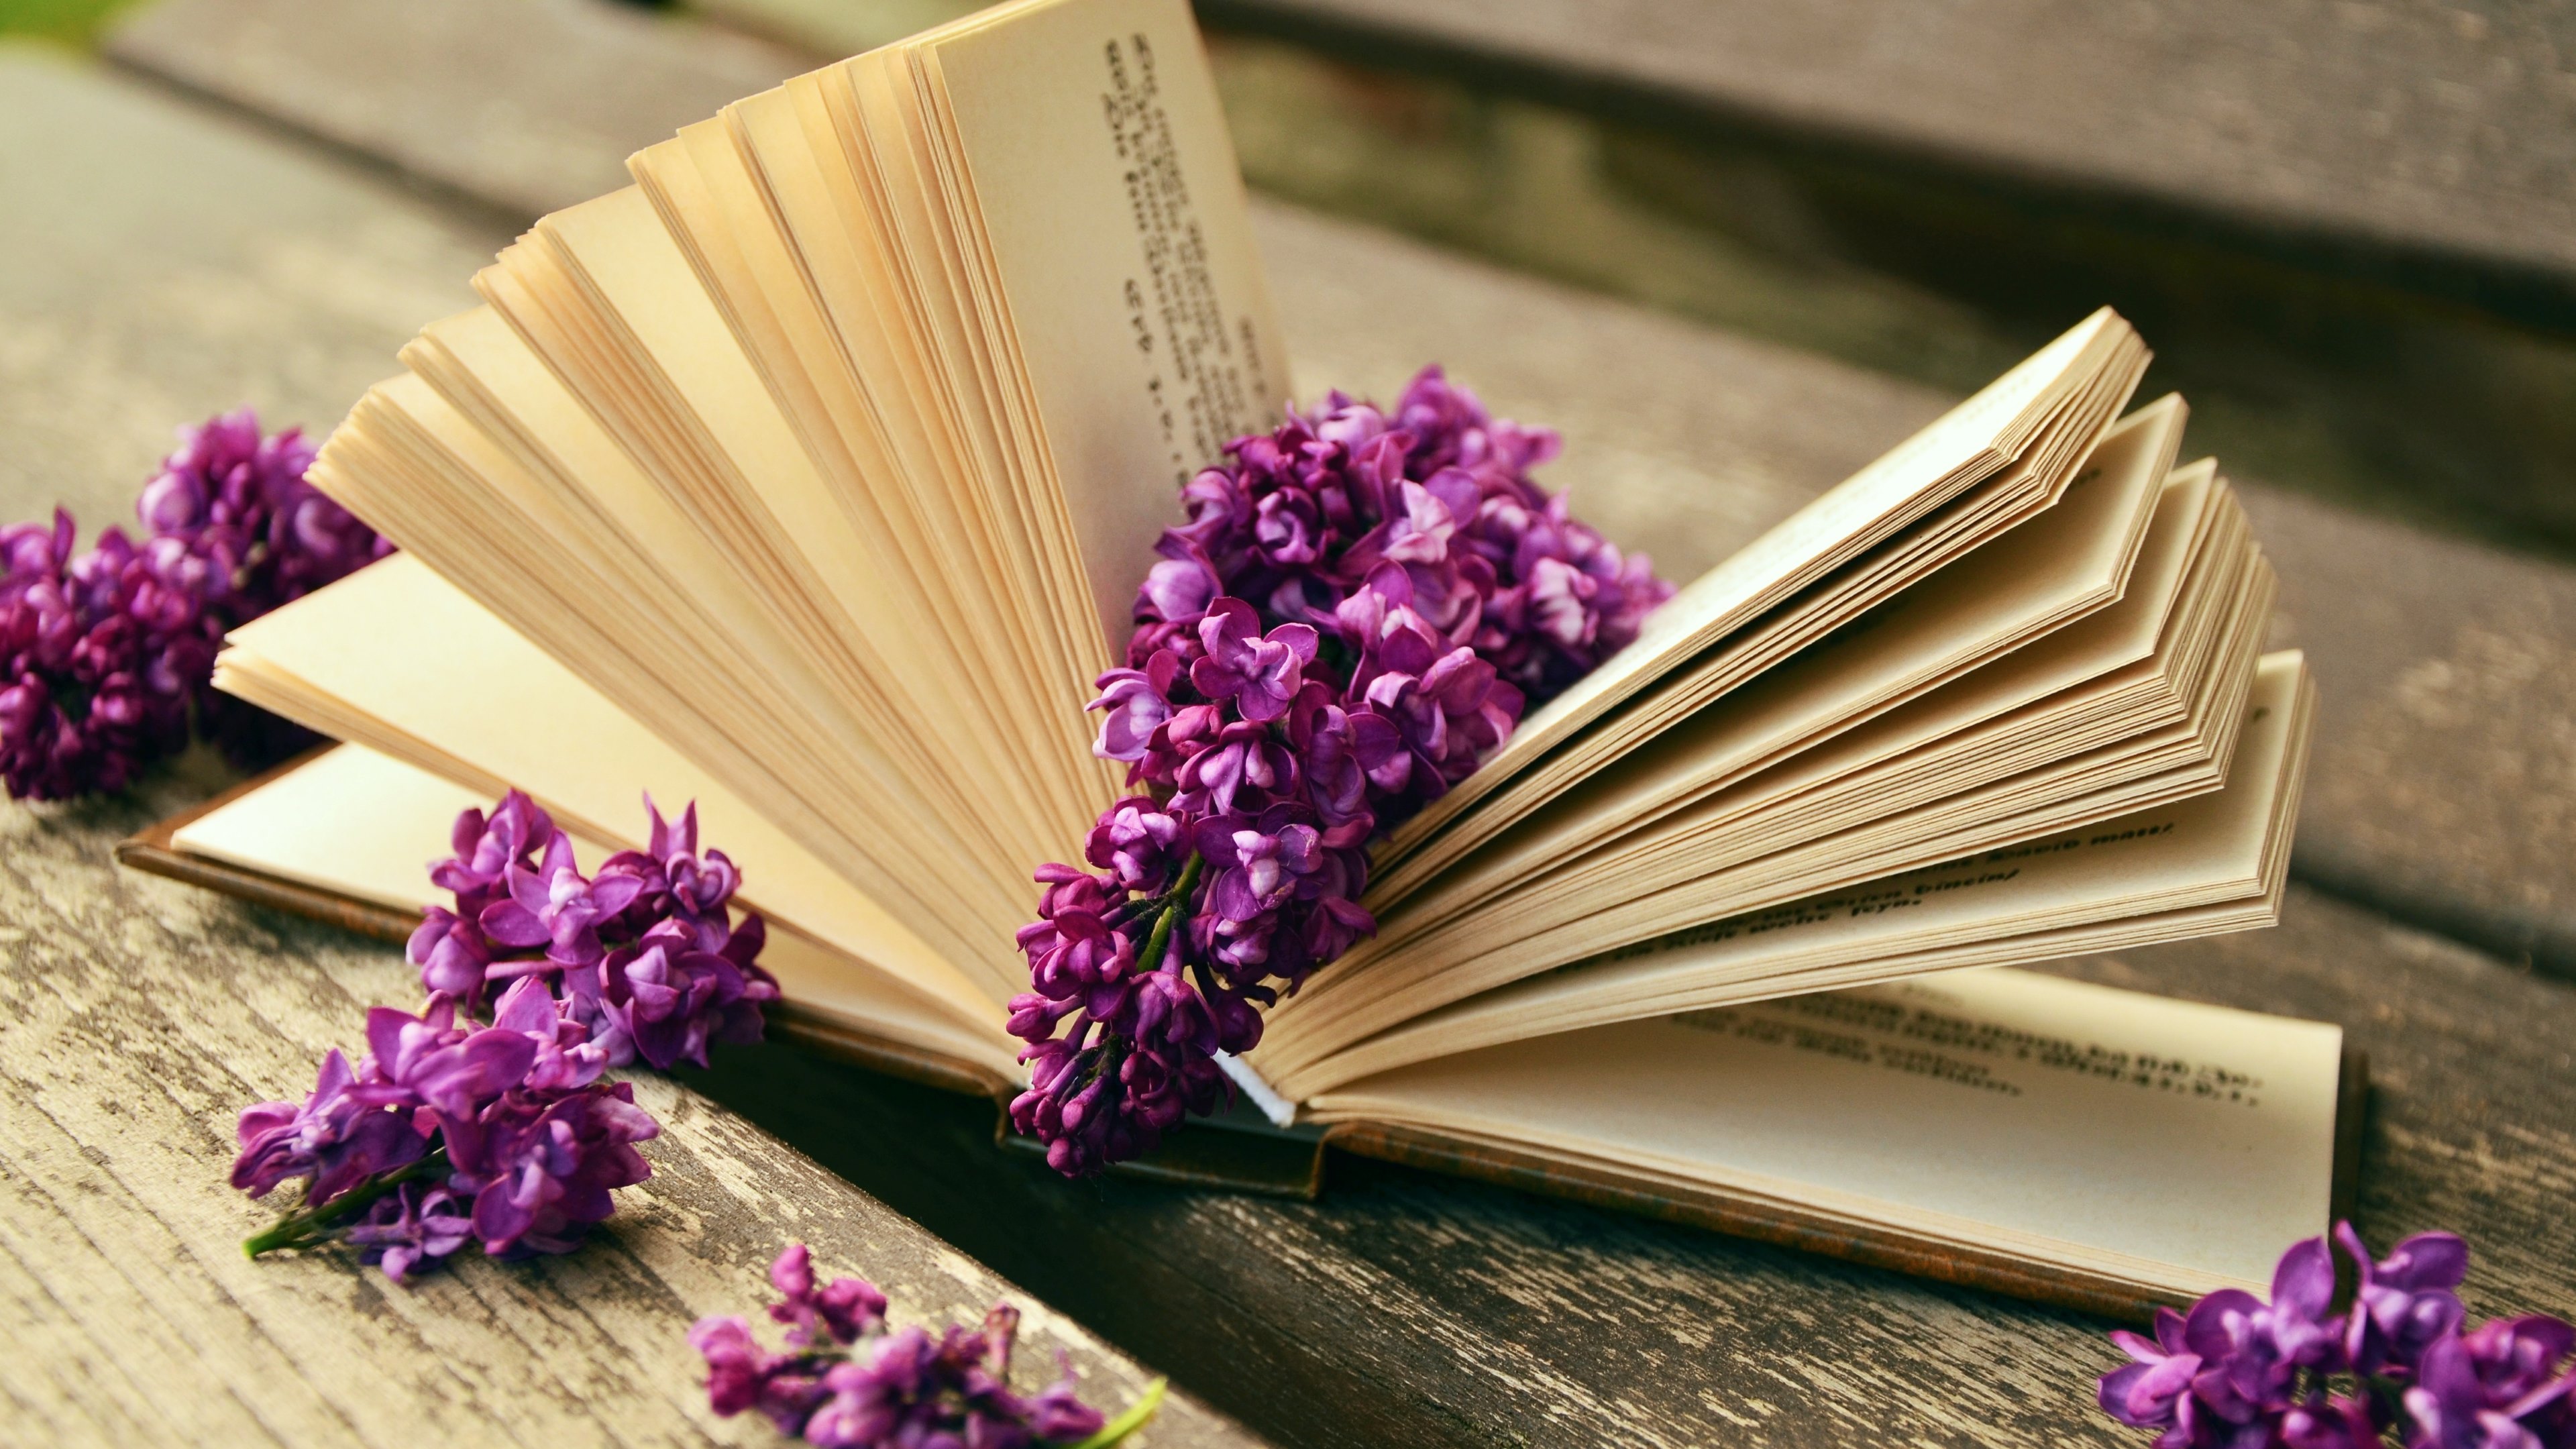 man made, book, flower, lilac, still life